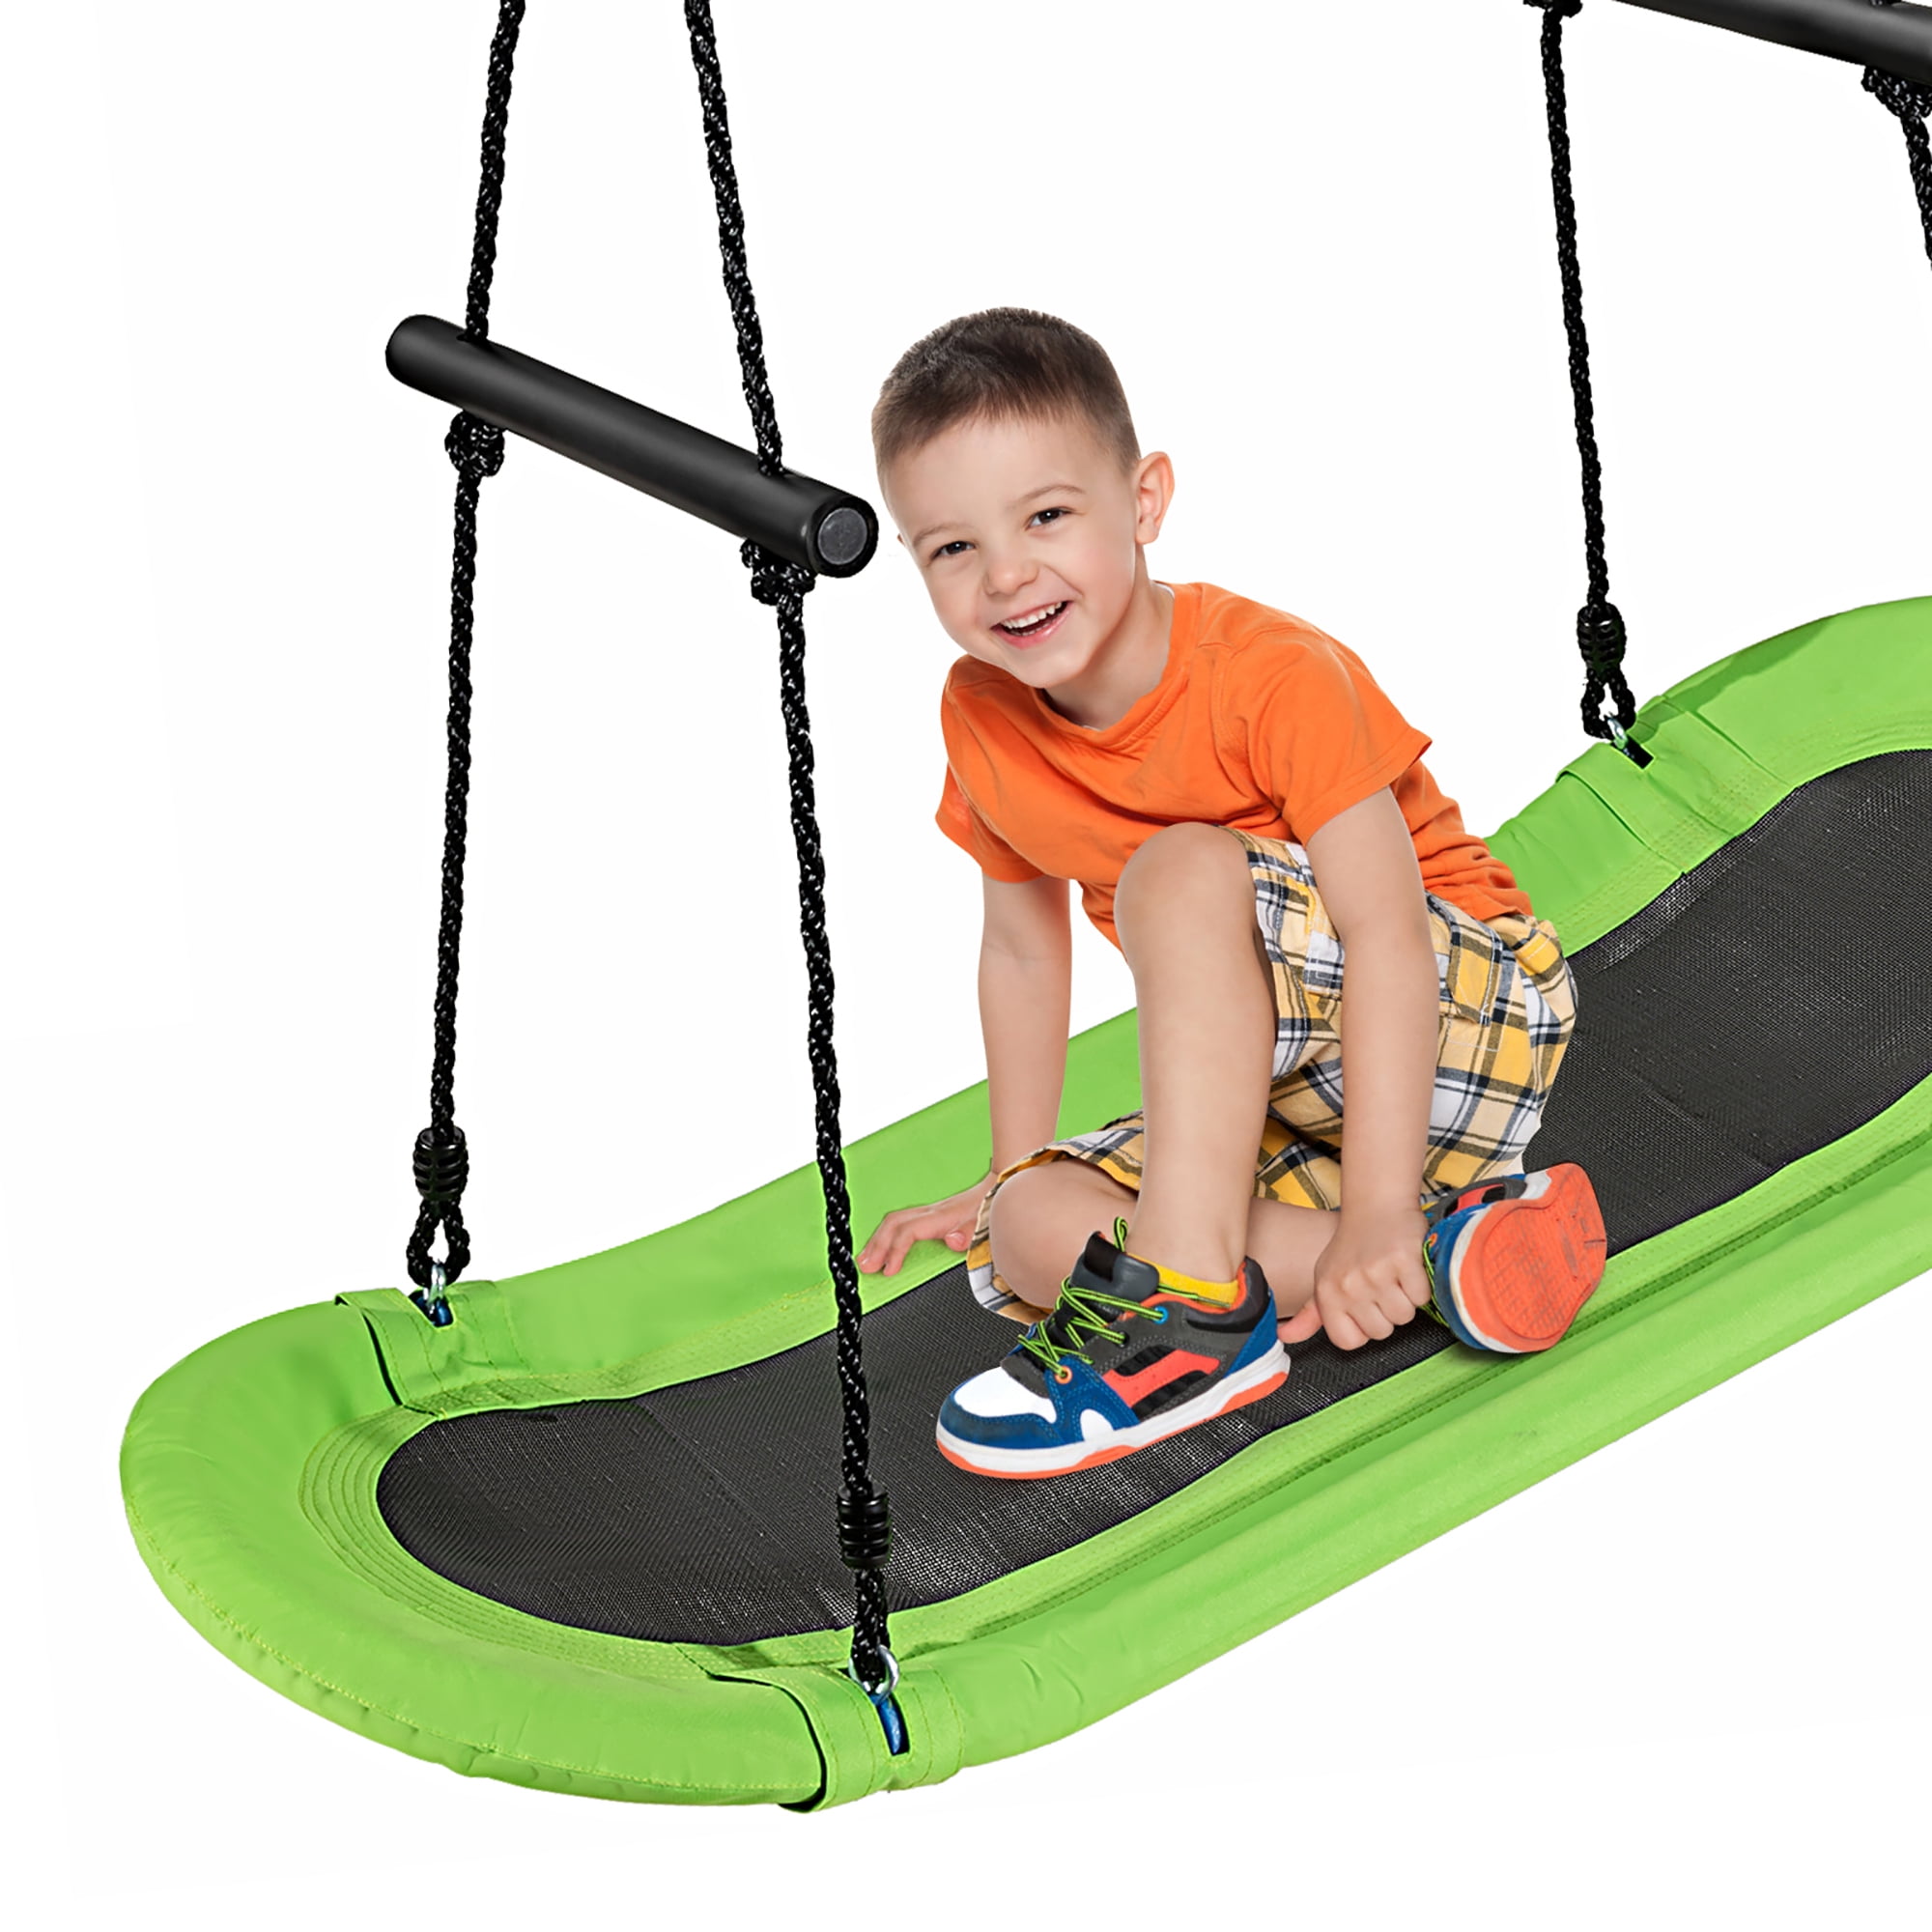 Details about   New Kids Outdoor Swing Board Hanging Rope Garden Playground Enjoy Saftey Seat 